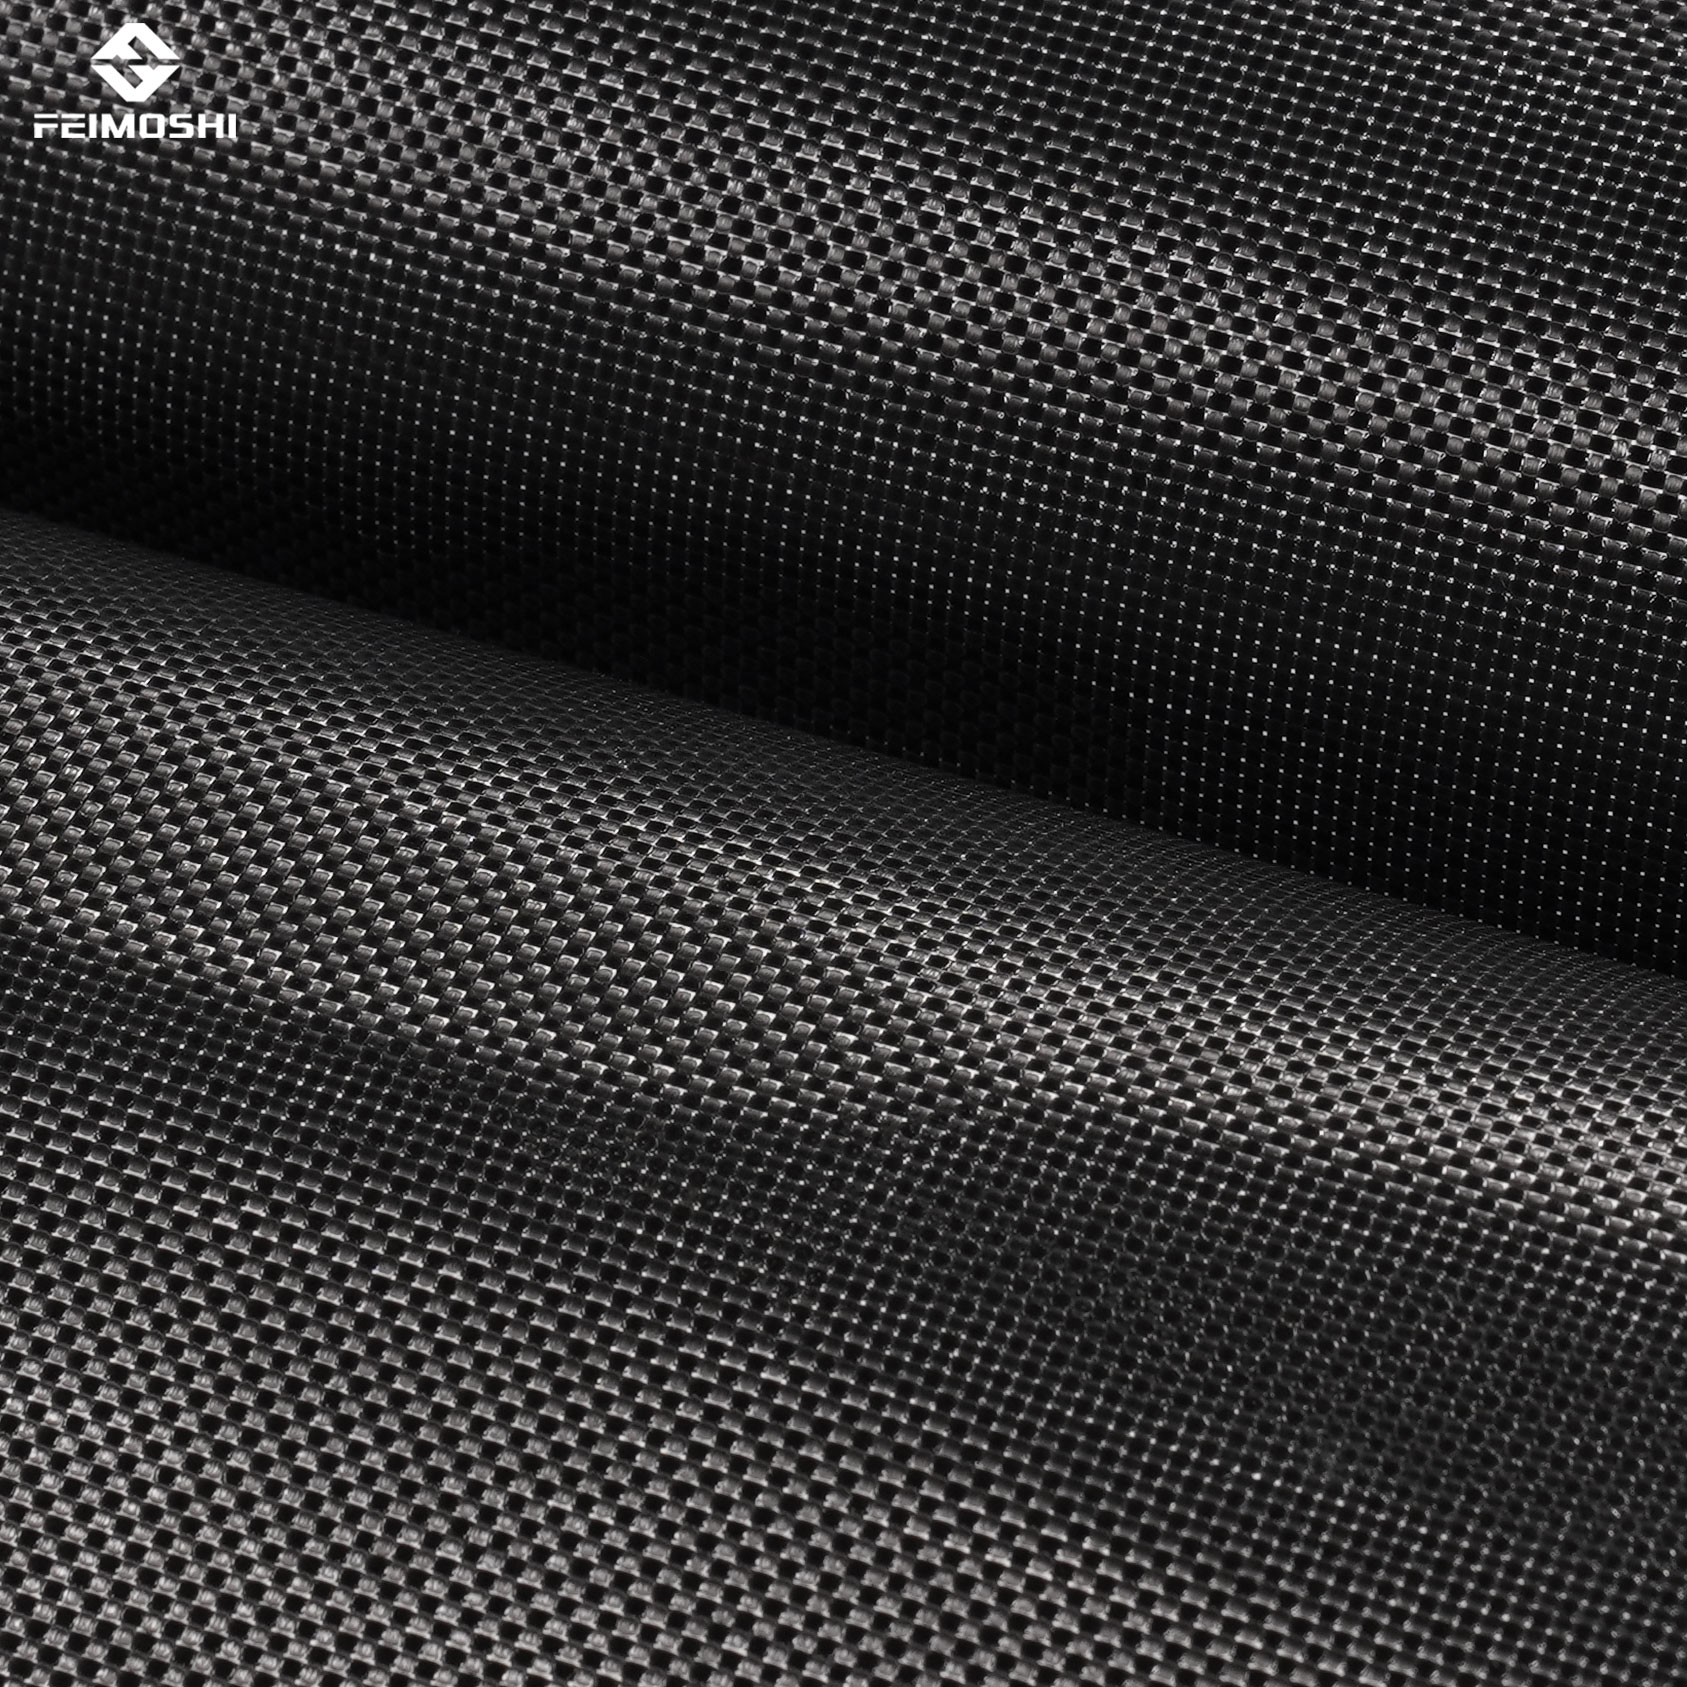 China Cheap price Composite Part - 3K twill matte 200g prepreg carbon fiber cloth – Feimoshi